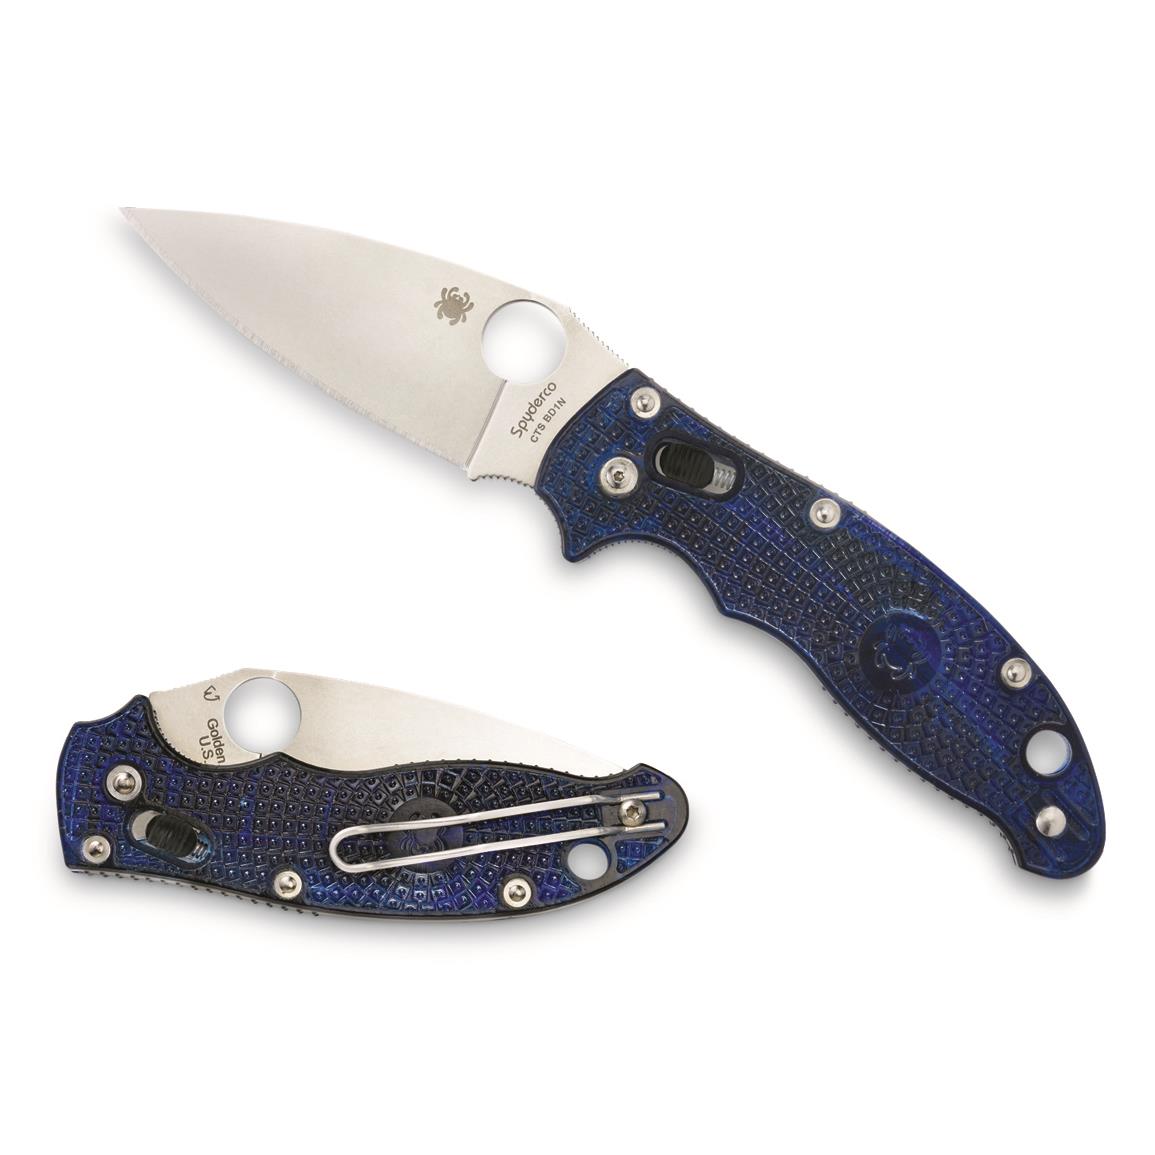 Spyderco Manix 2 Lightweight Translucent Blue Folding Knife